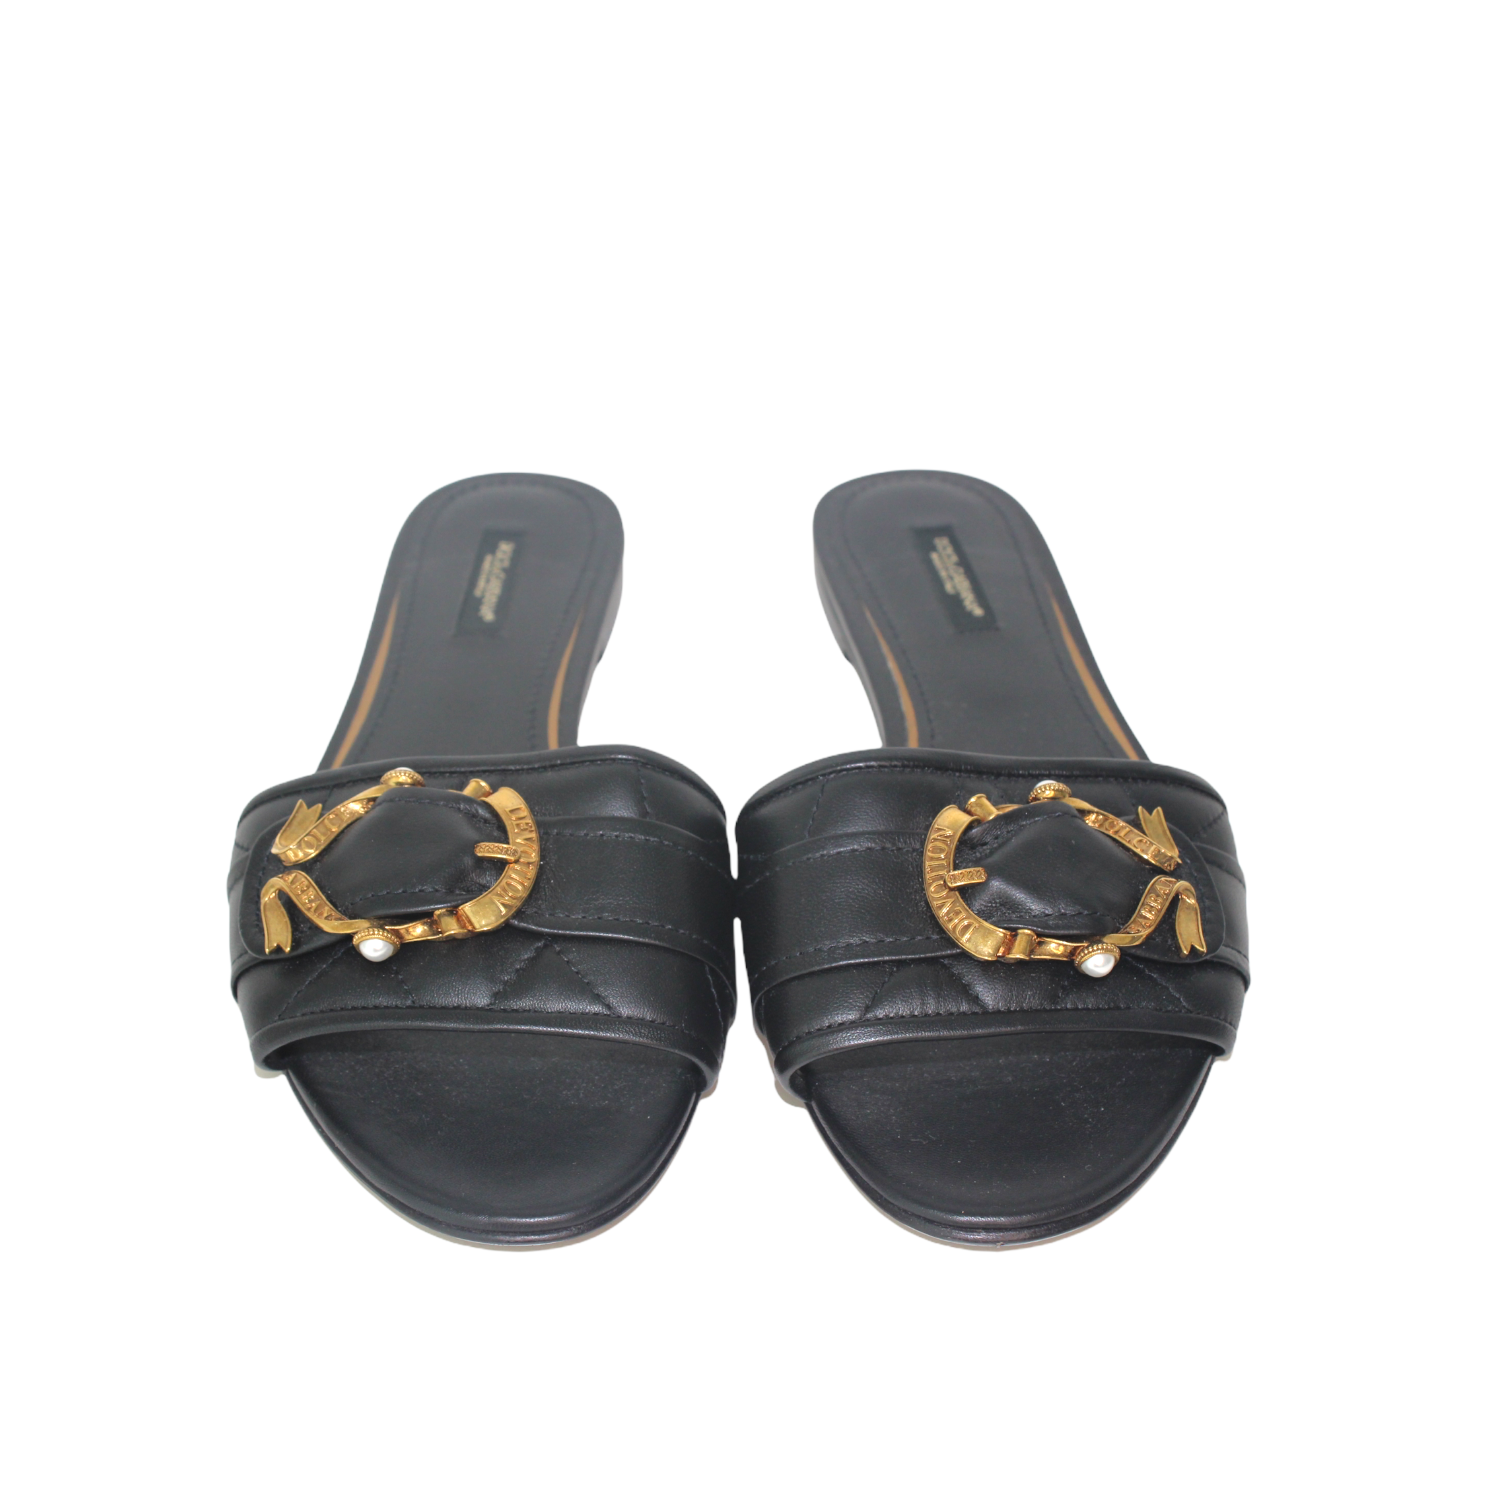 Dolce & Gabanna sandals black size 39 EU | The Luxury Flavor